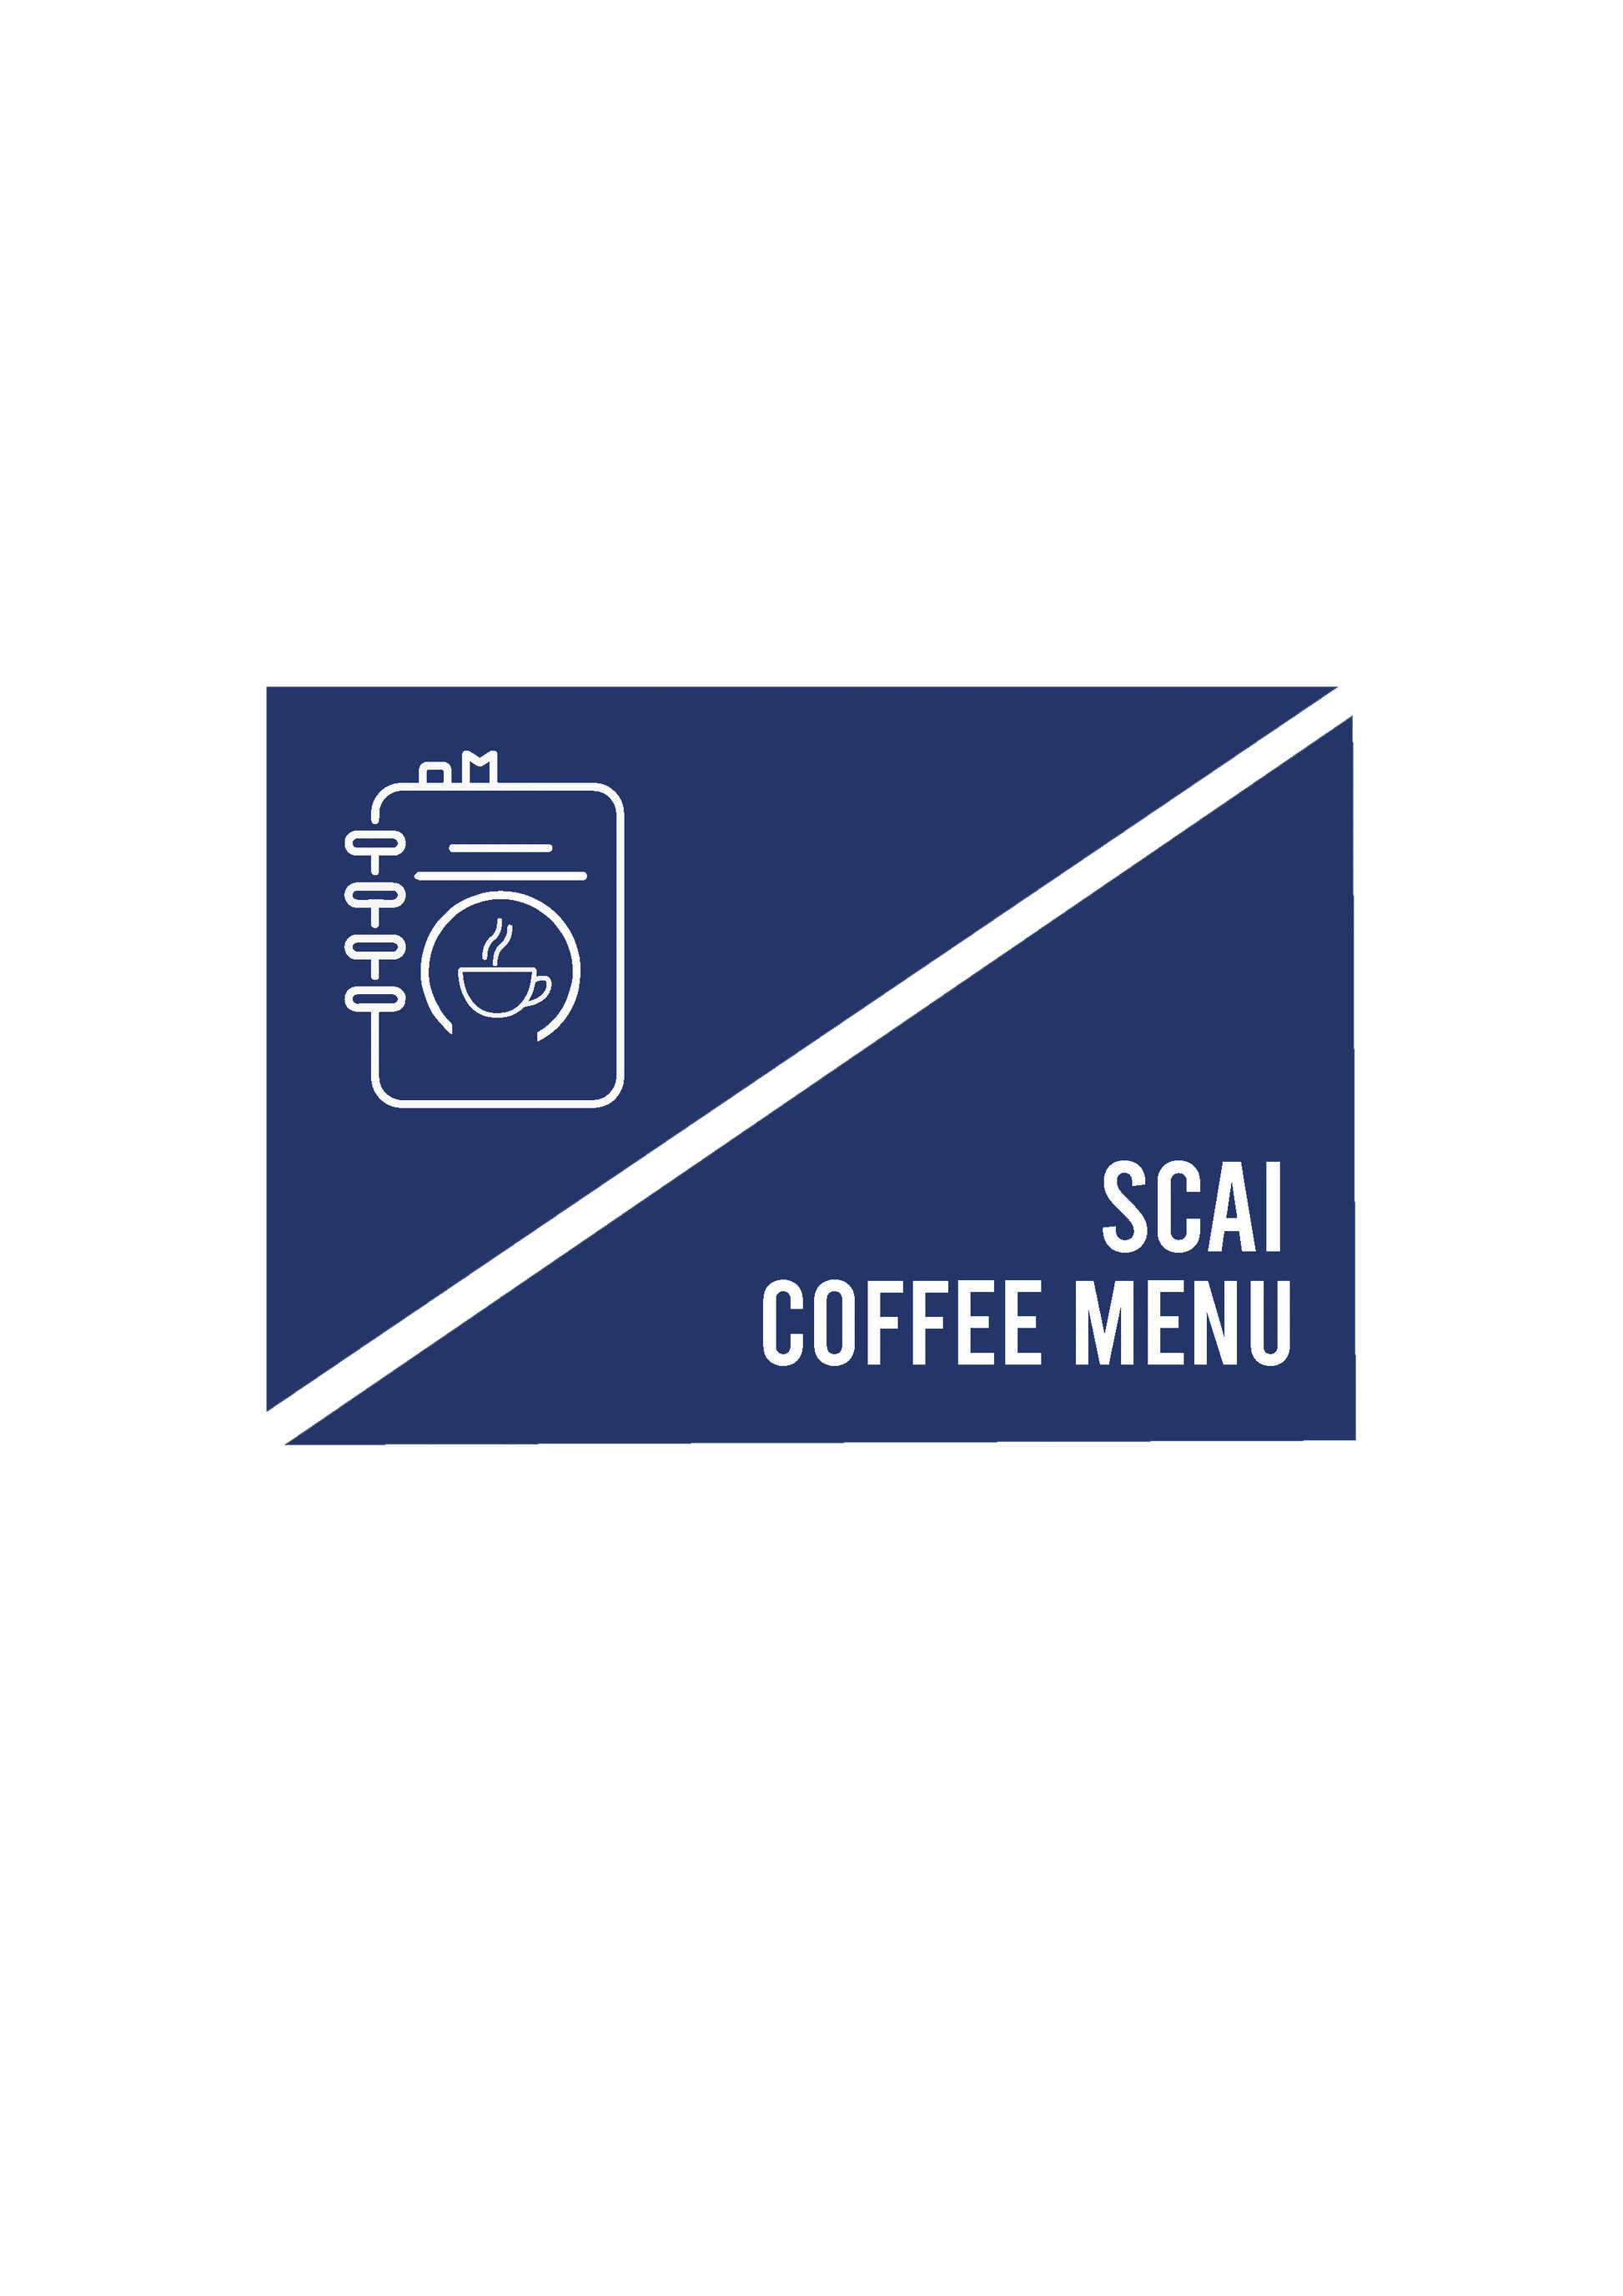 SCAI Coffee Menu workshop for basis of coffee beverage creation and pairings.